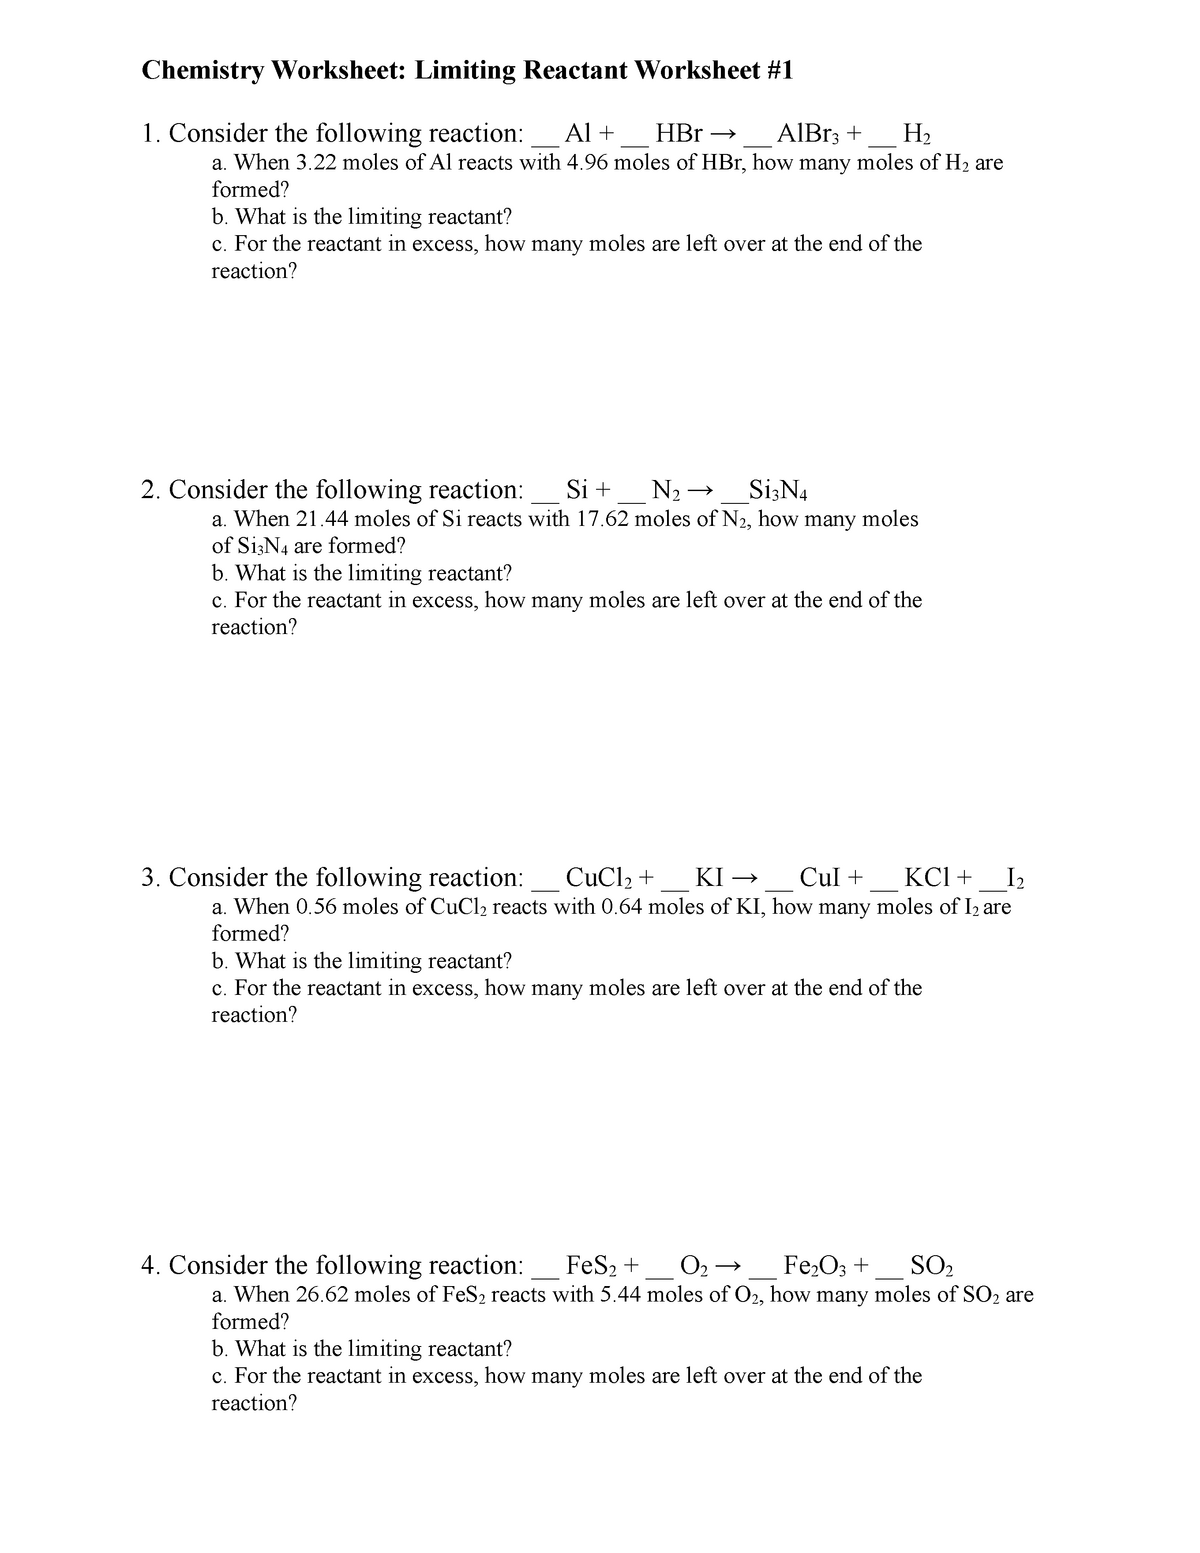 Limiting Reactant Wkst 21 - Visual art - StuDocu Within Limiting Reactant Worksheet Answers